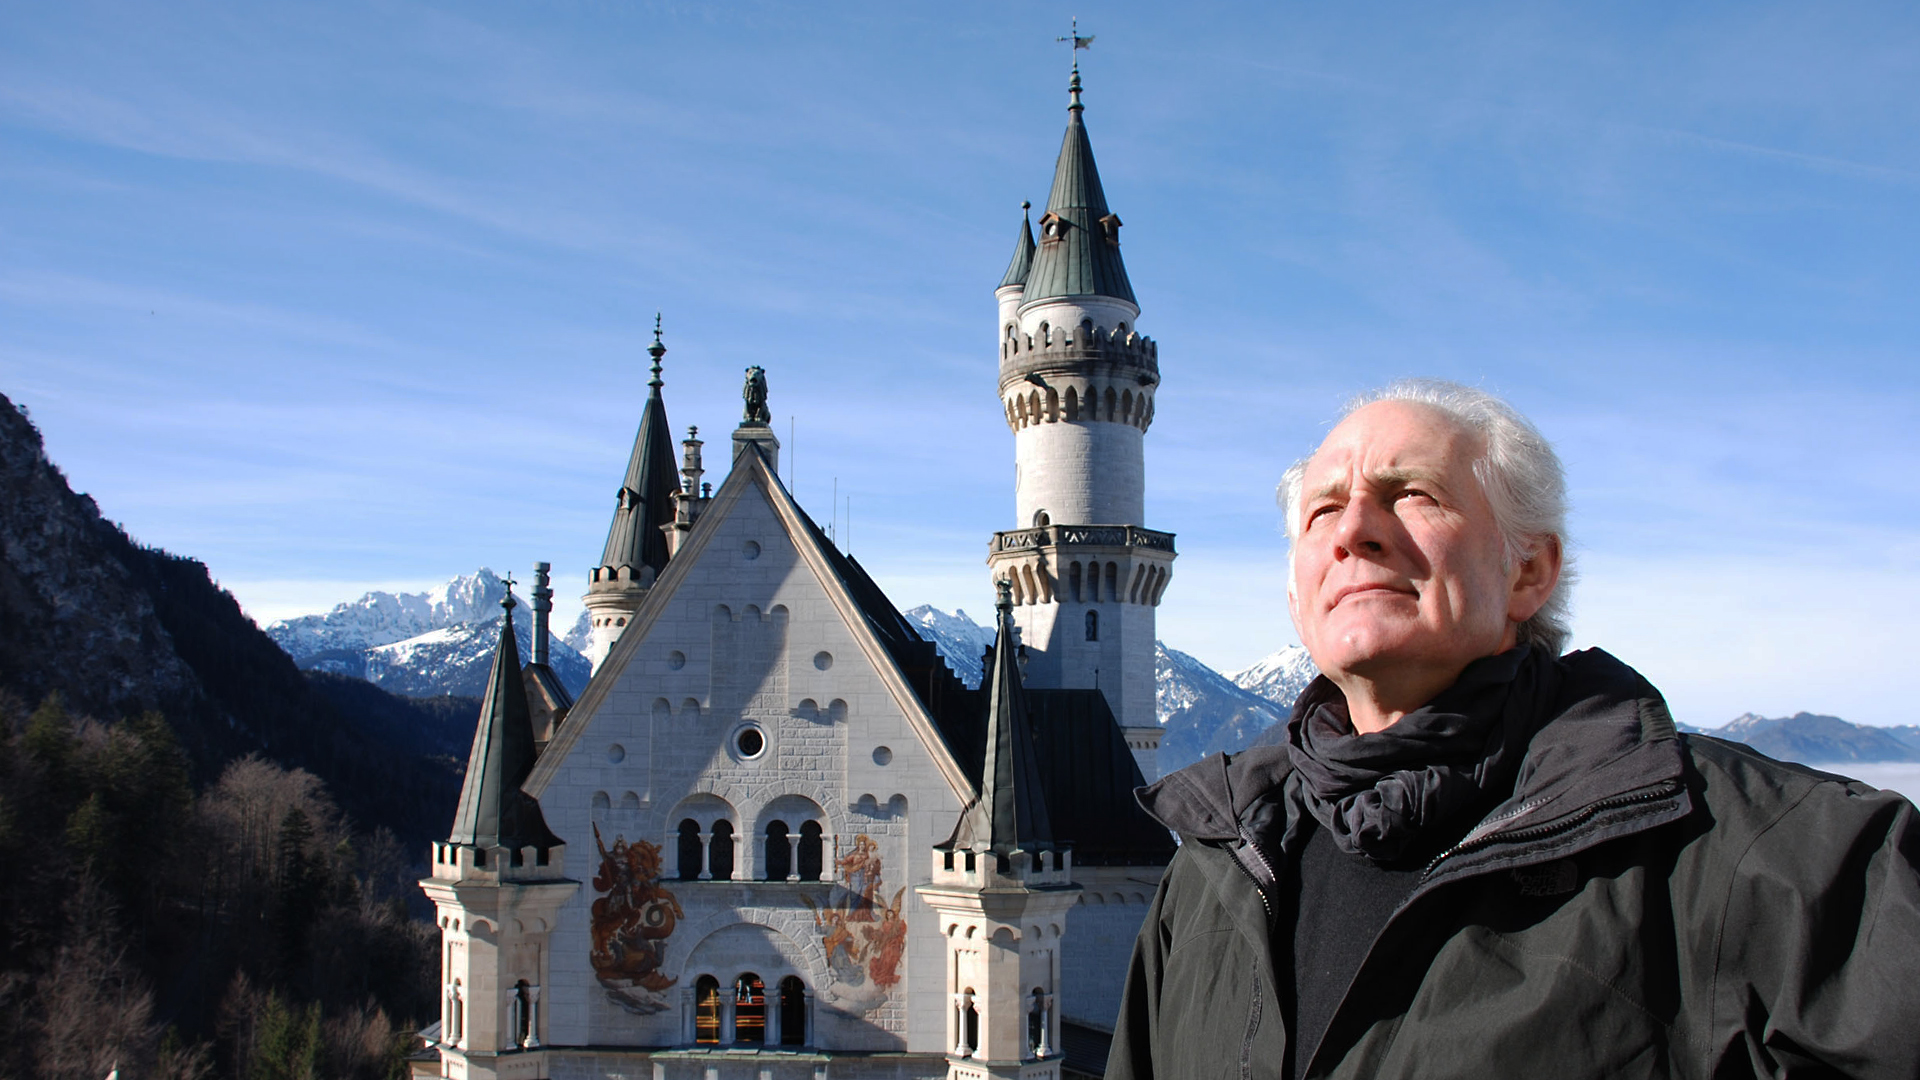 The Fairytale Castles of Ludwig II